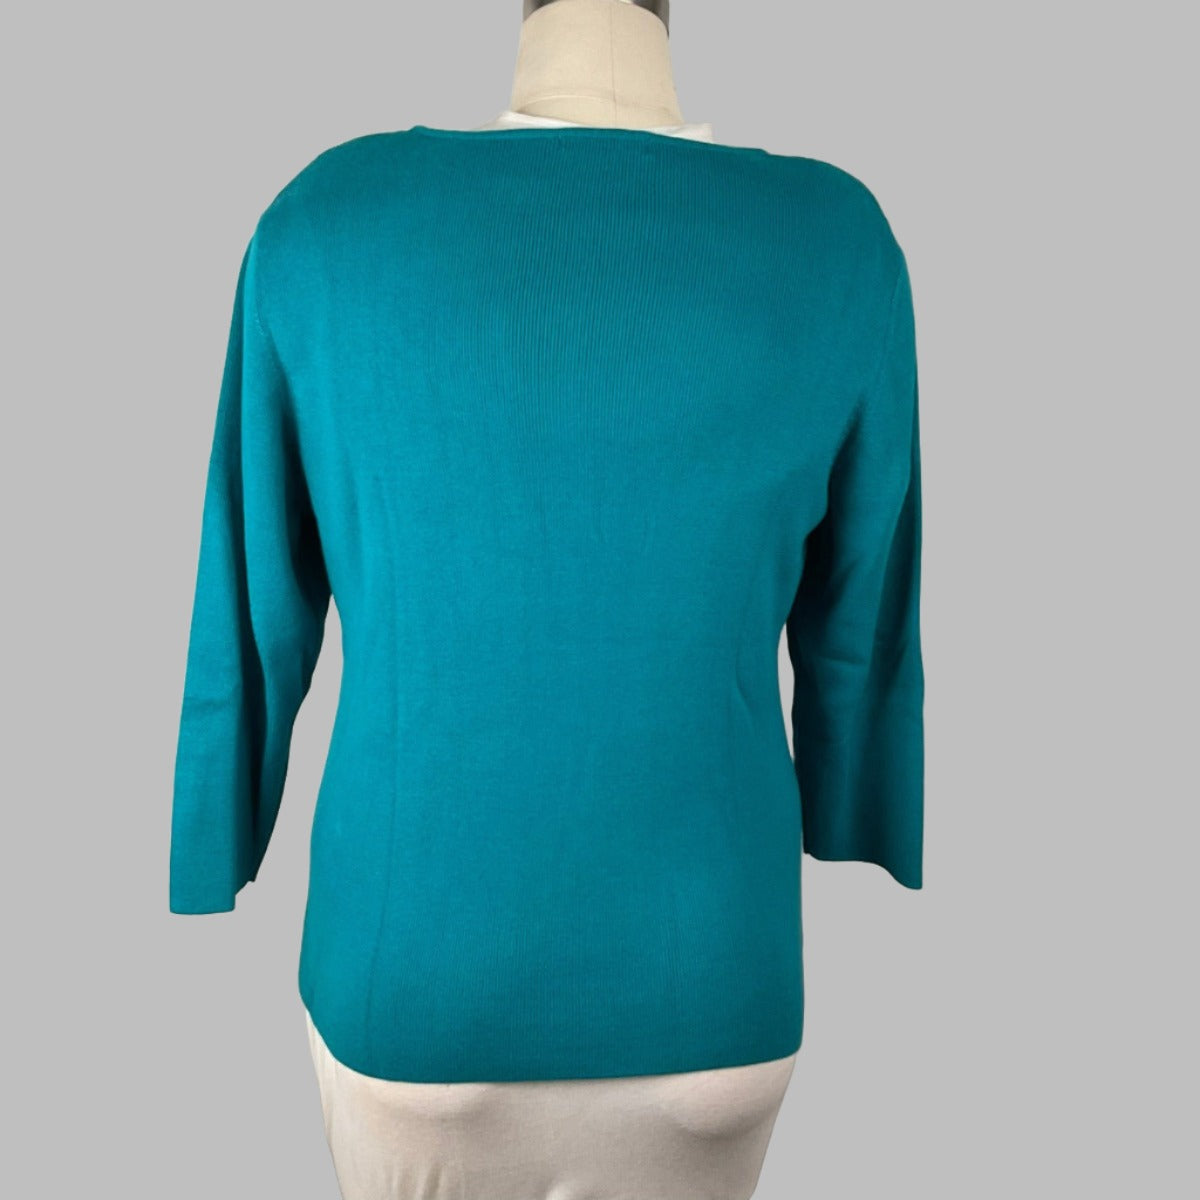 Women's Pierre Cardin Turquoise Keyhole Sweater XL - Back View